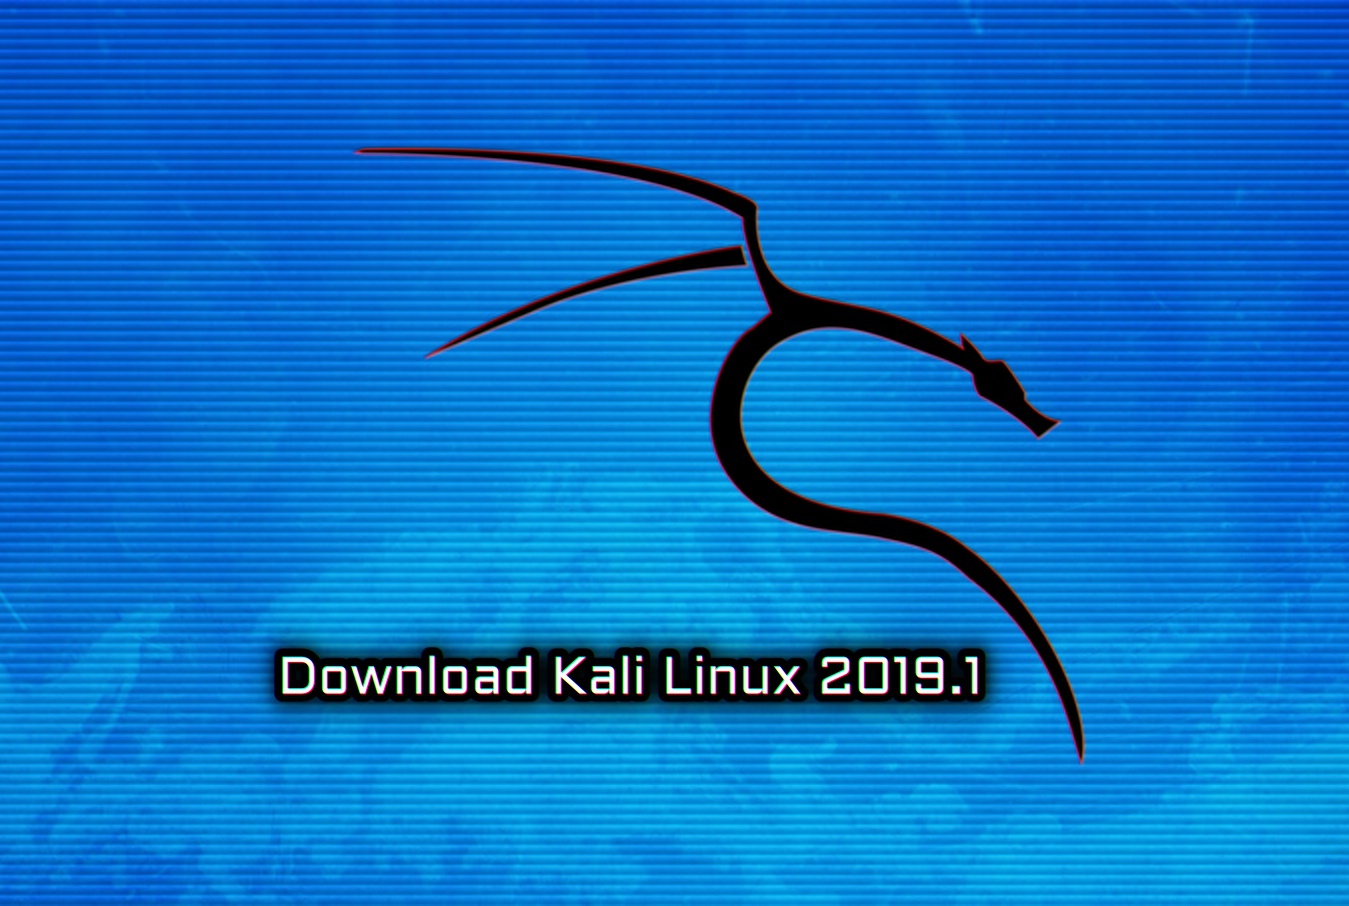 Download Kali Linux 2019.1 with Metasploit 5.0